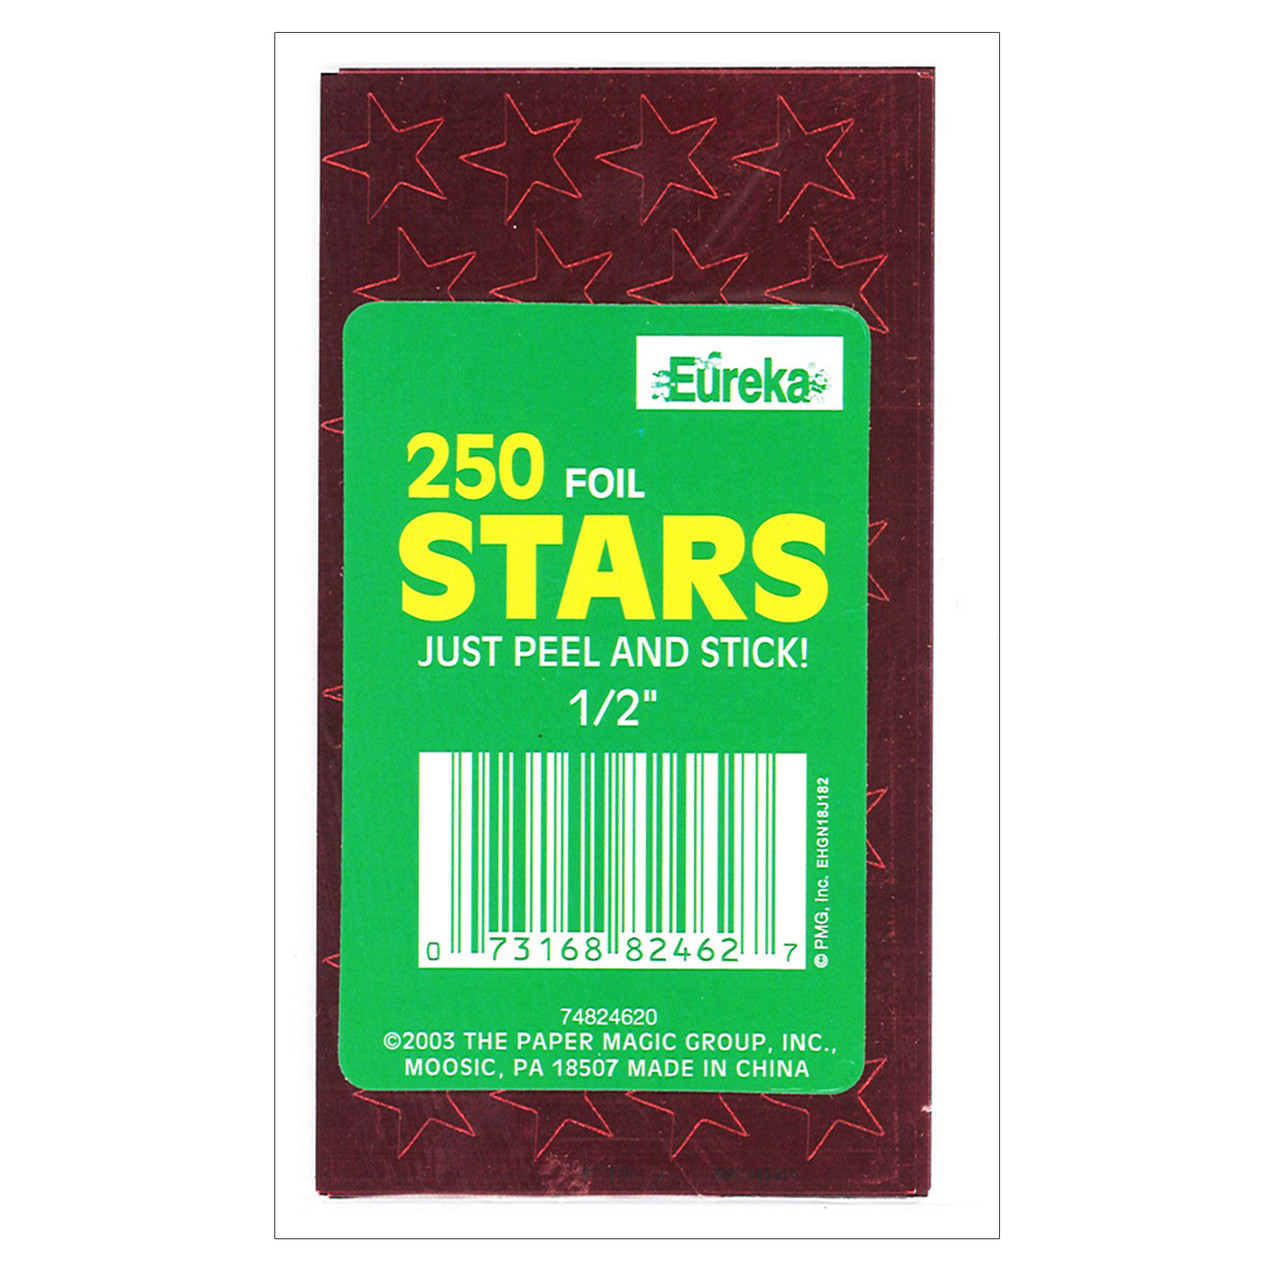 1/2 Gold (250) Presto-Stick Foil Star Stickers - EU-82422